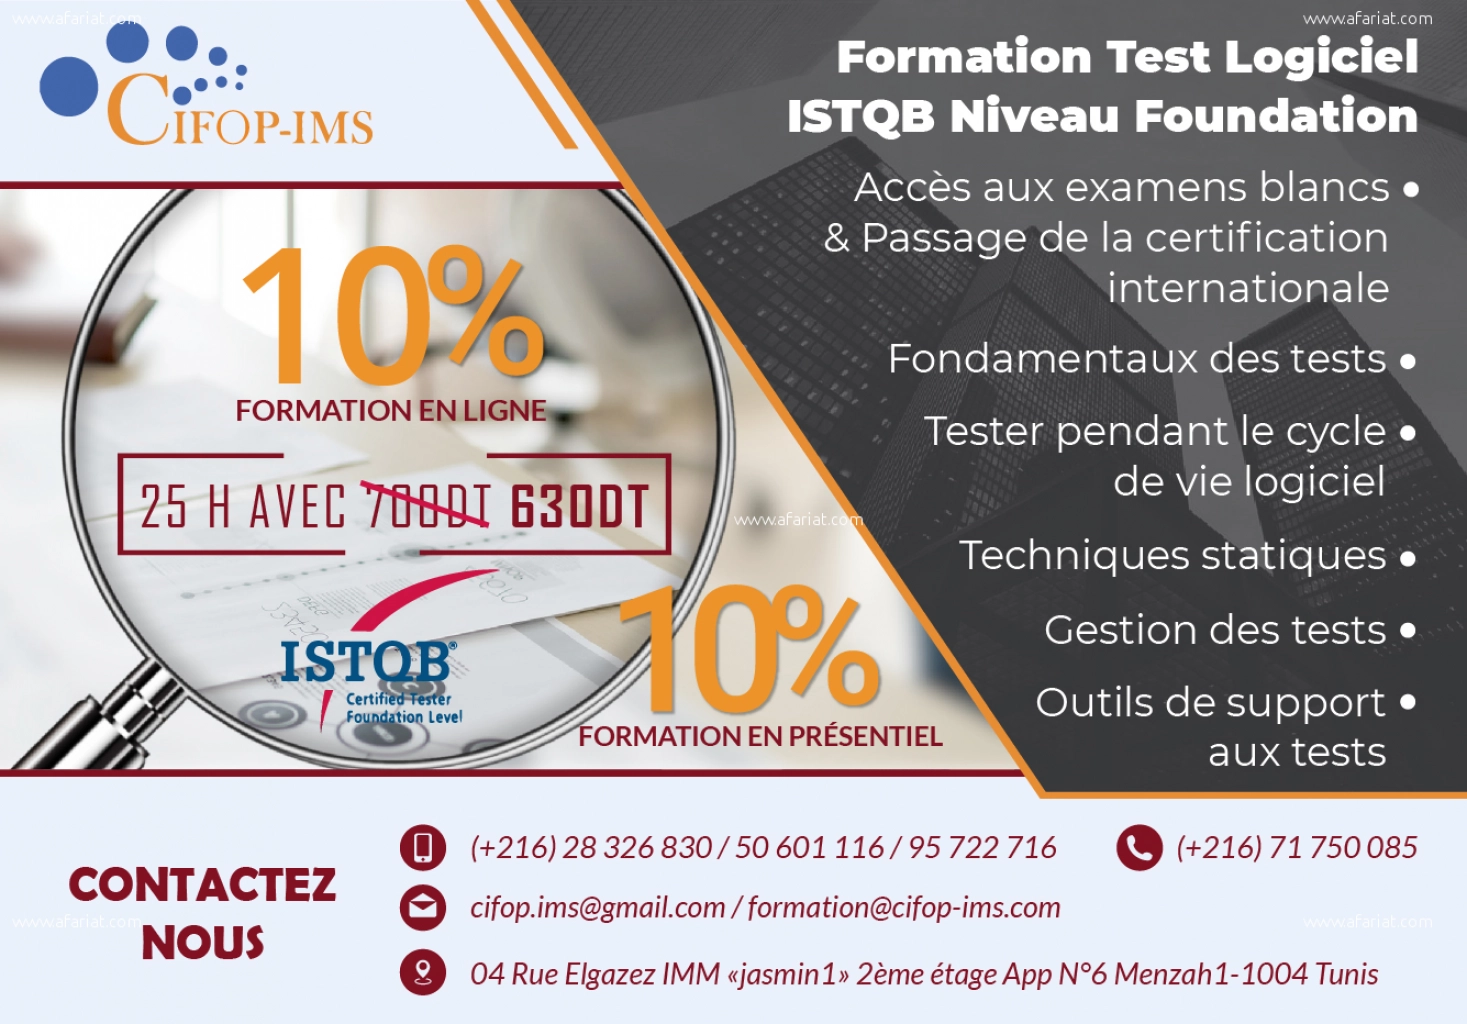 Formation Test logiciel : ISTQB niveau Fondation